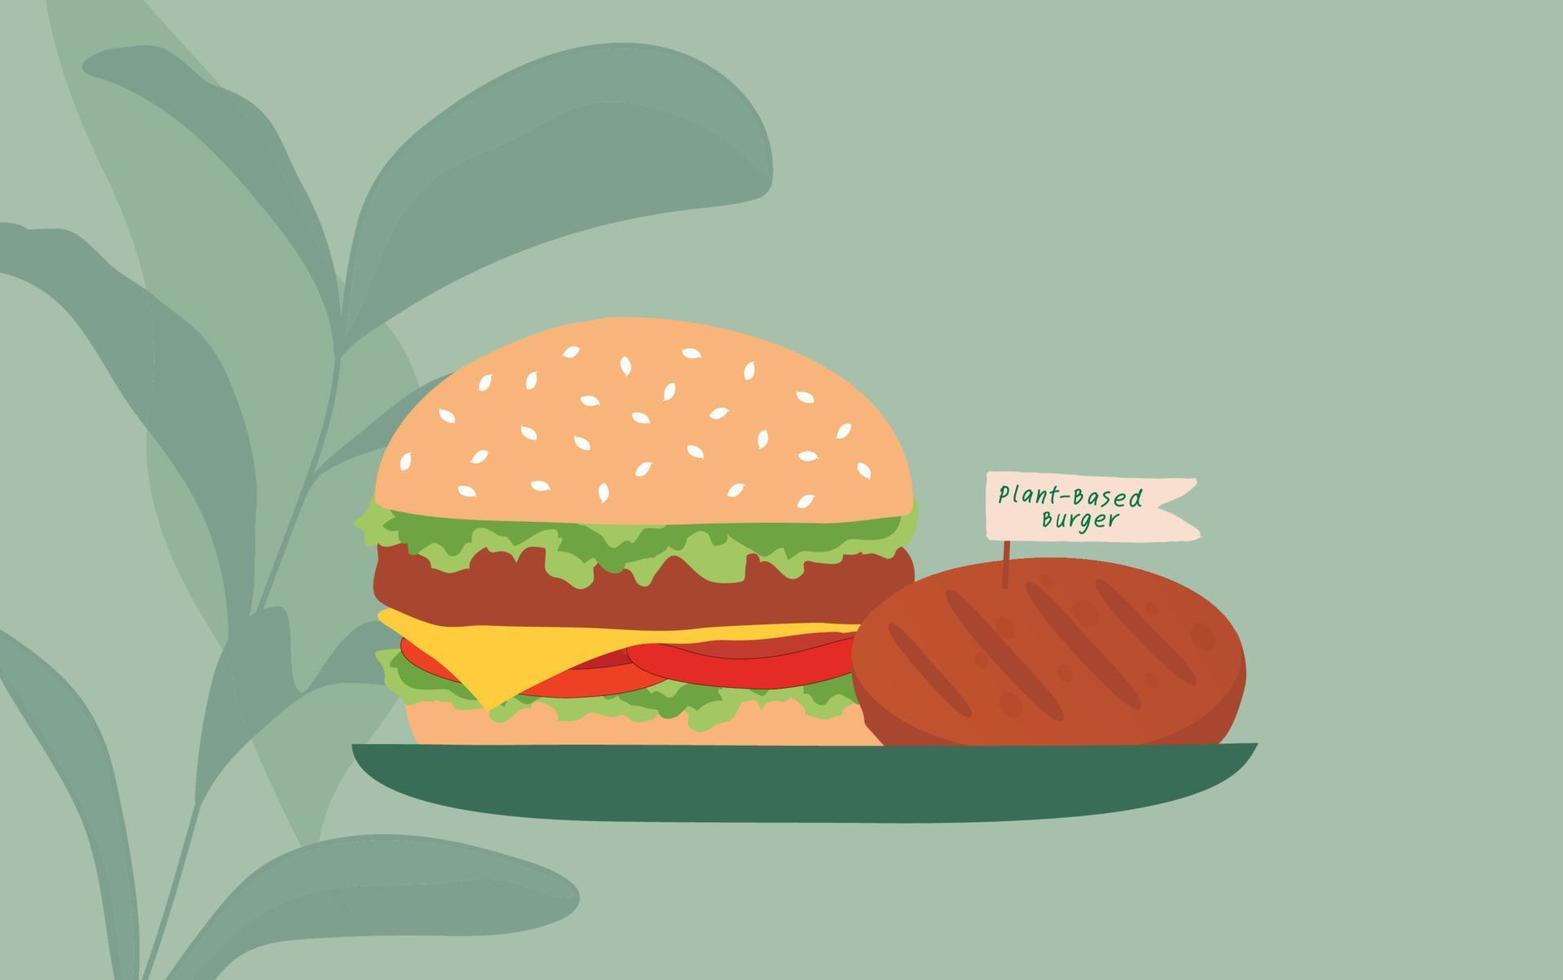 Plant based beyond meat hamburger vector illustration. Vegan and healthy lifestyle vegetarian concept